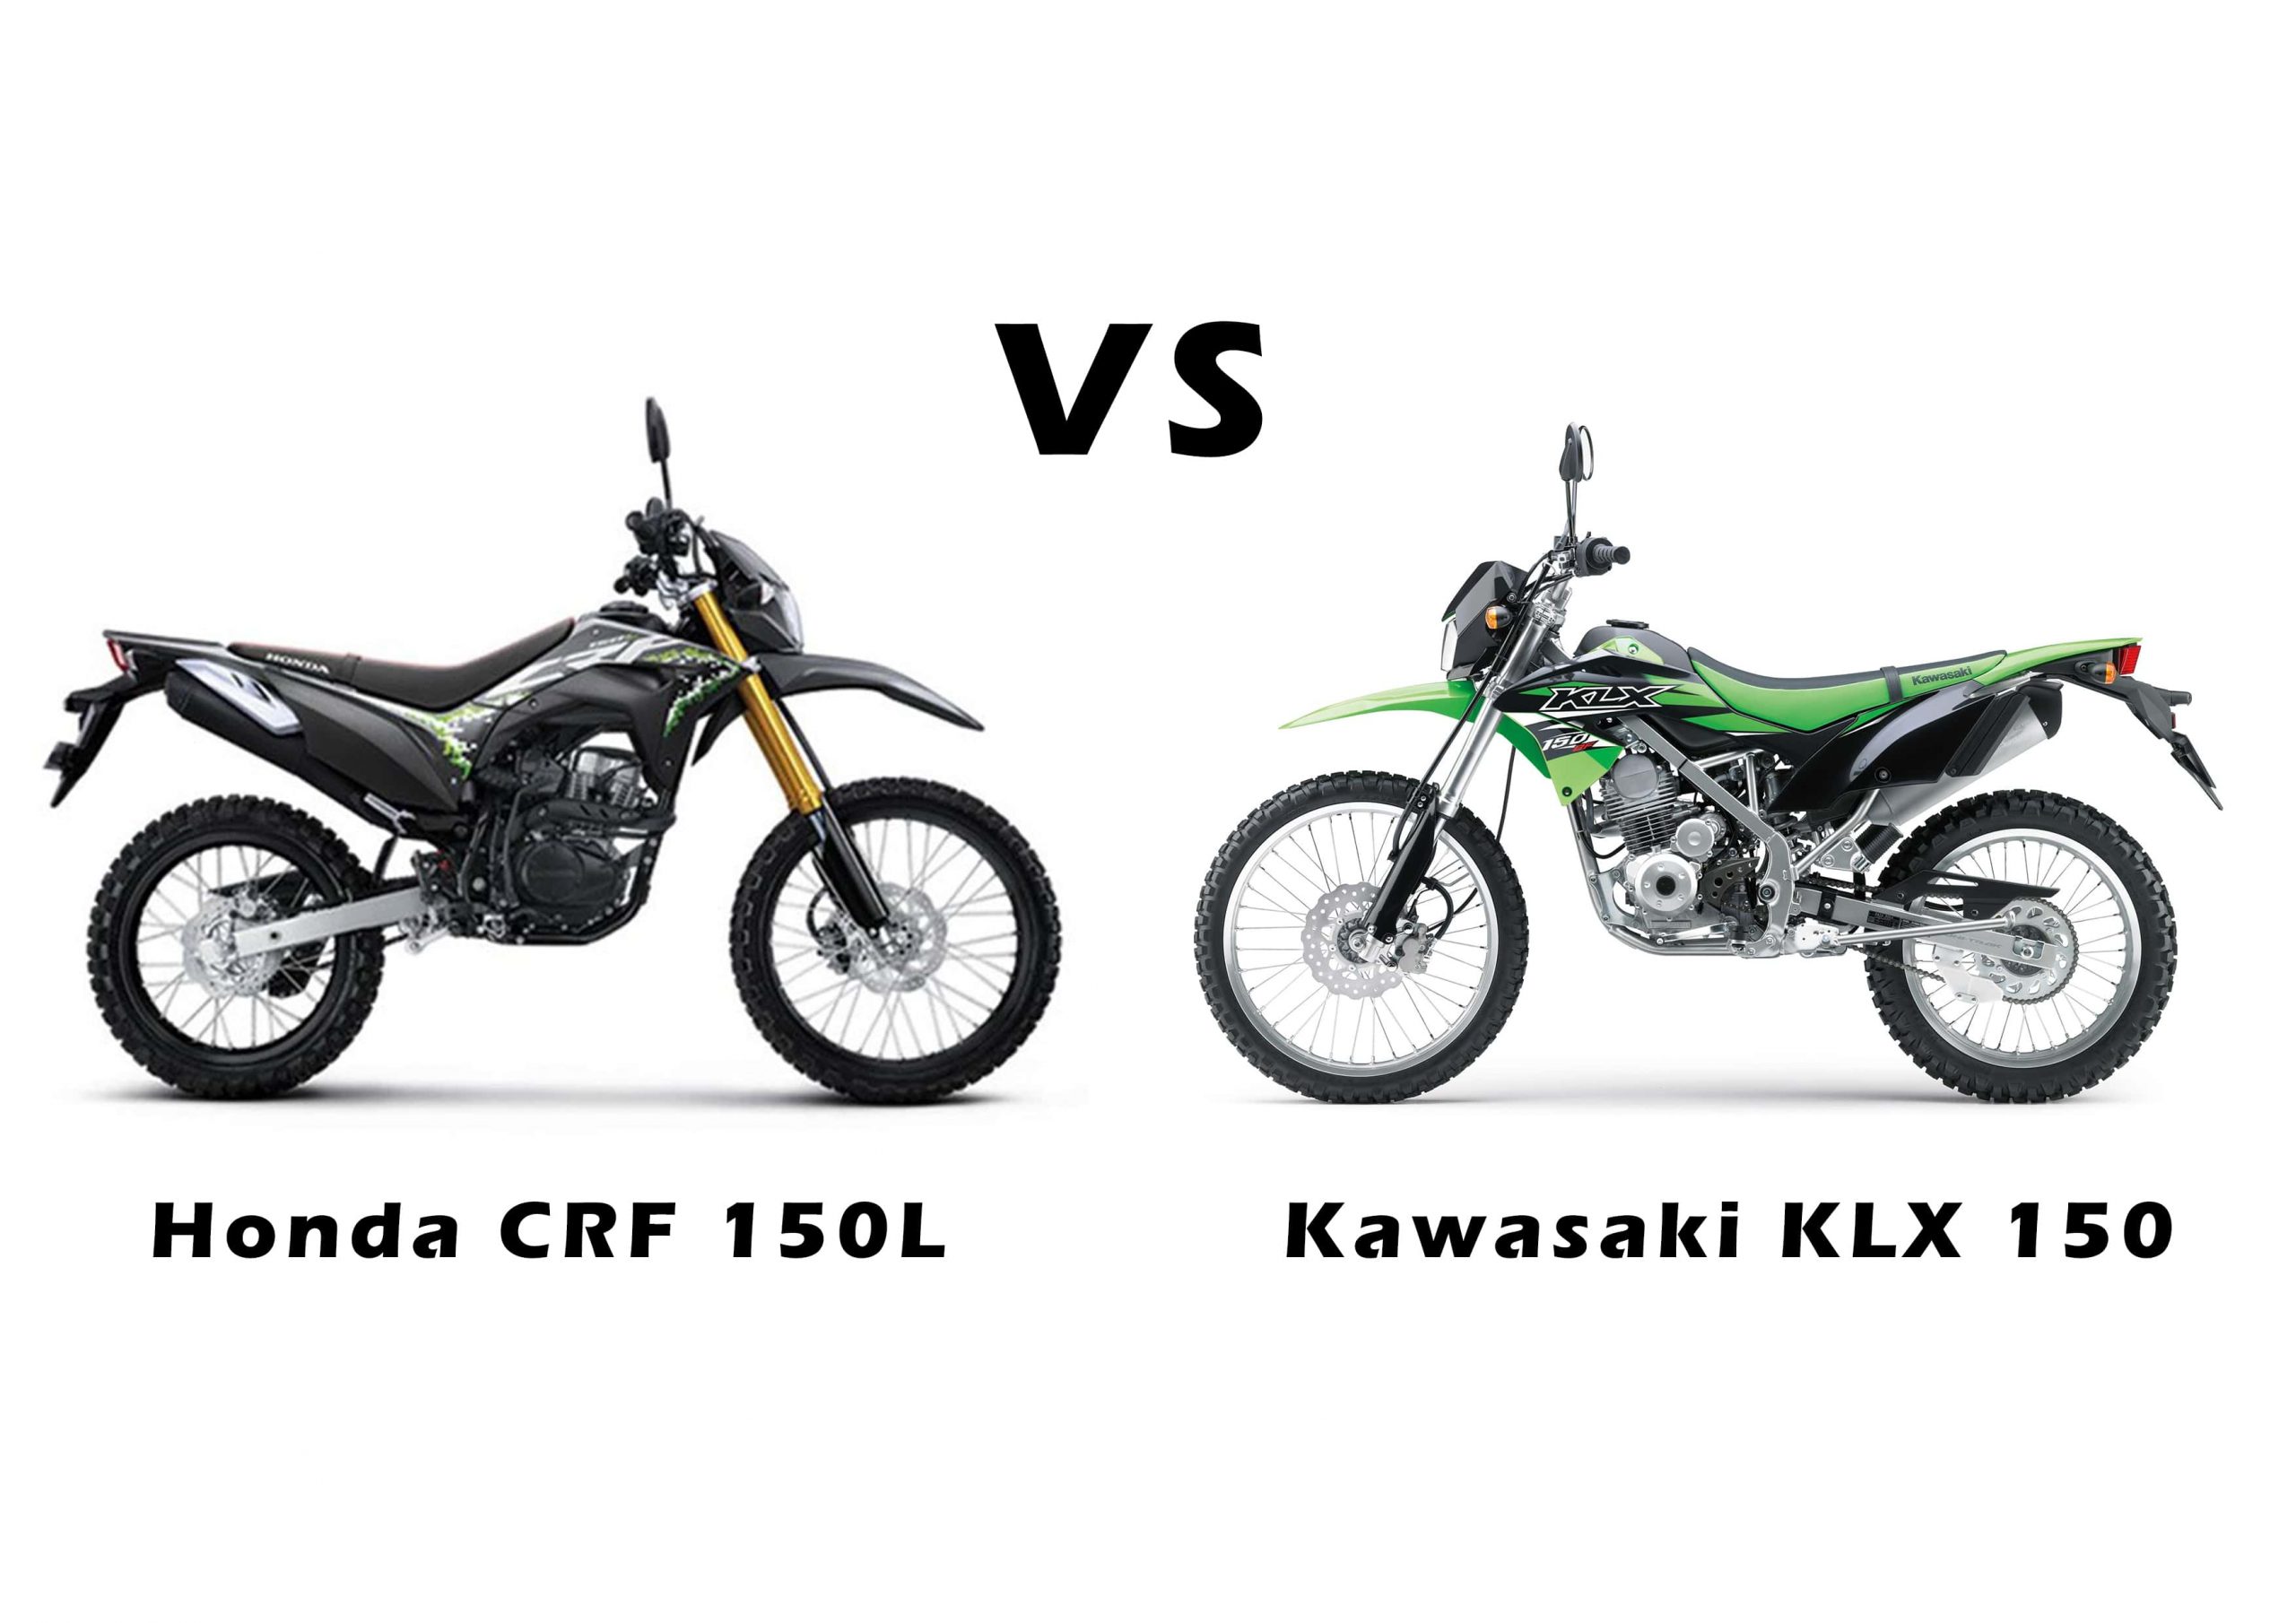 Perbedaan Klx Dan Crf. Perbandingan Kawasaki KLX 150 dan Honda CRF 150L